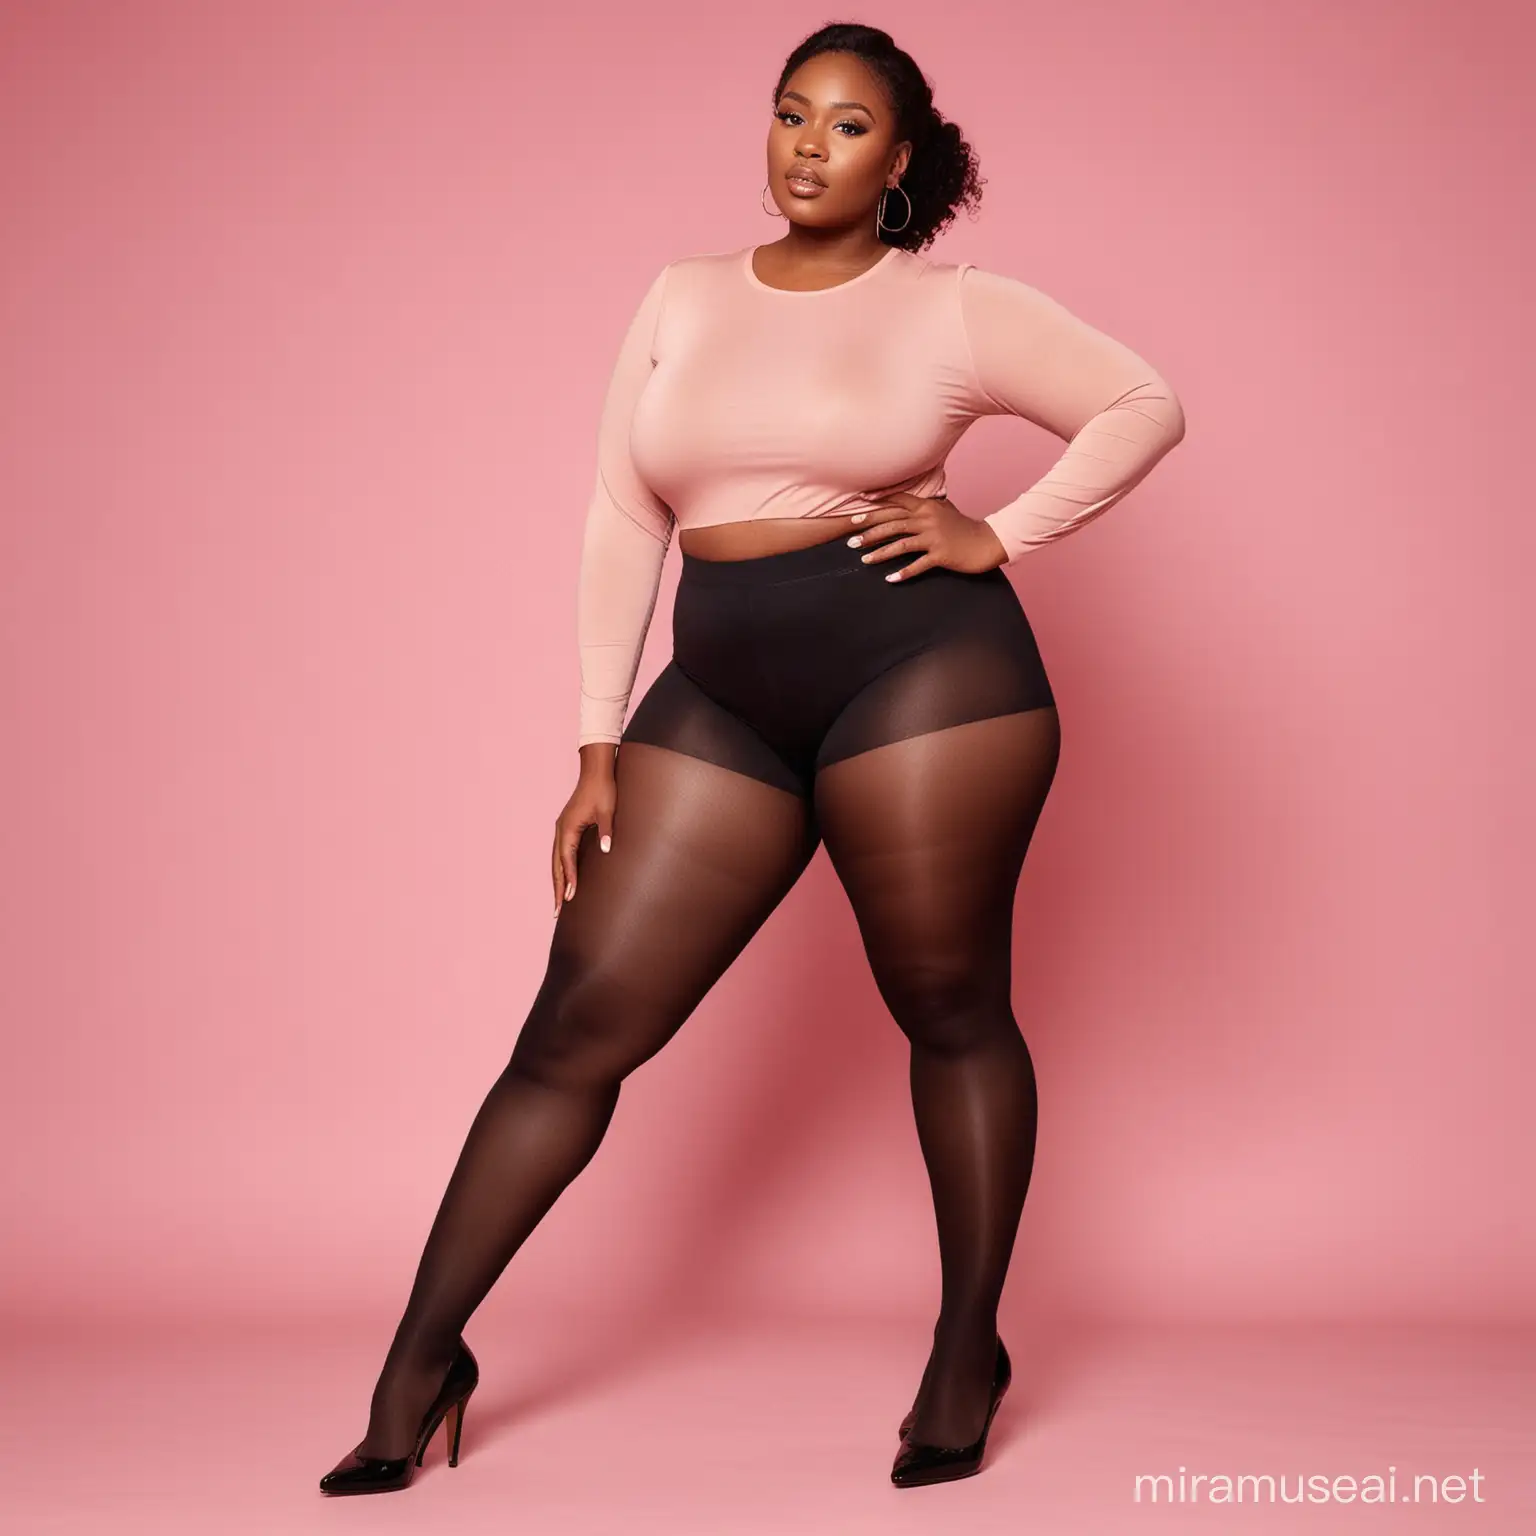 Plussize Nigerian Model in Black Pantyhose on Pink Background